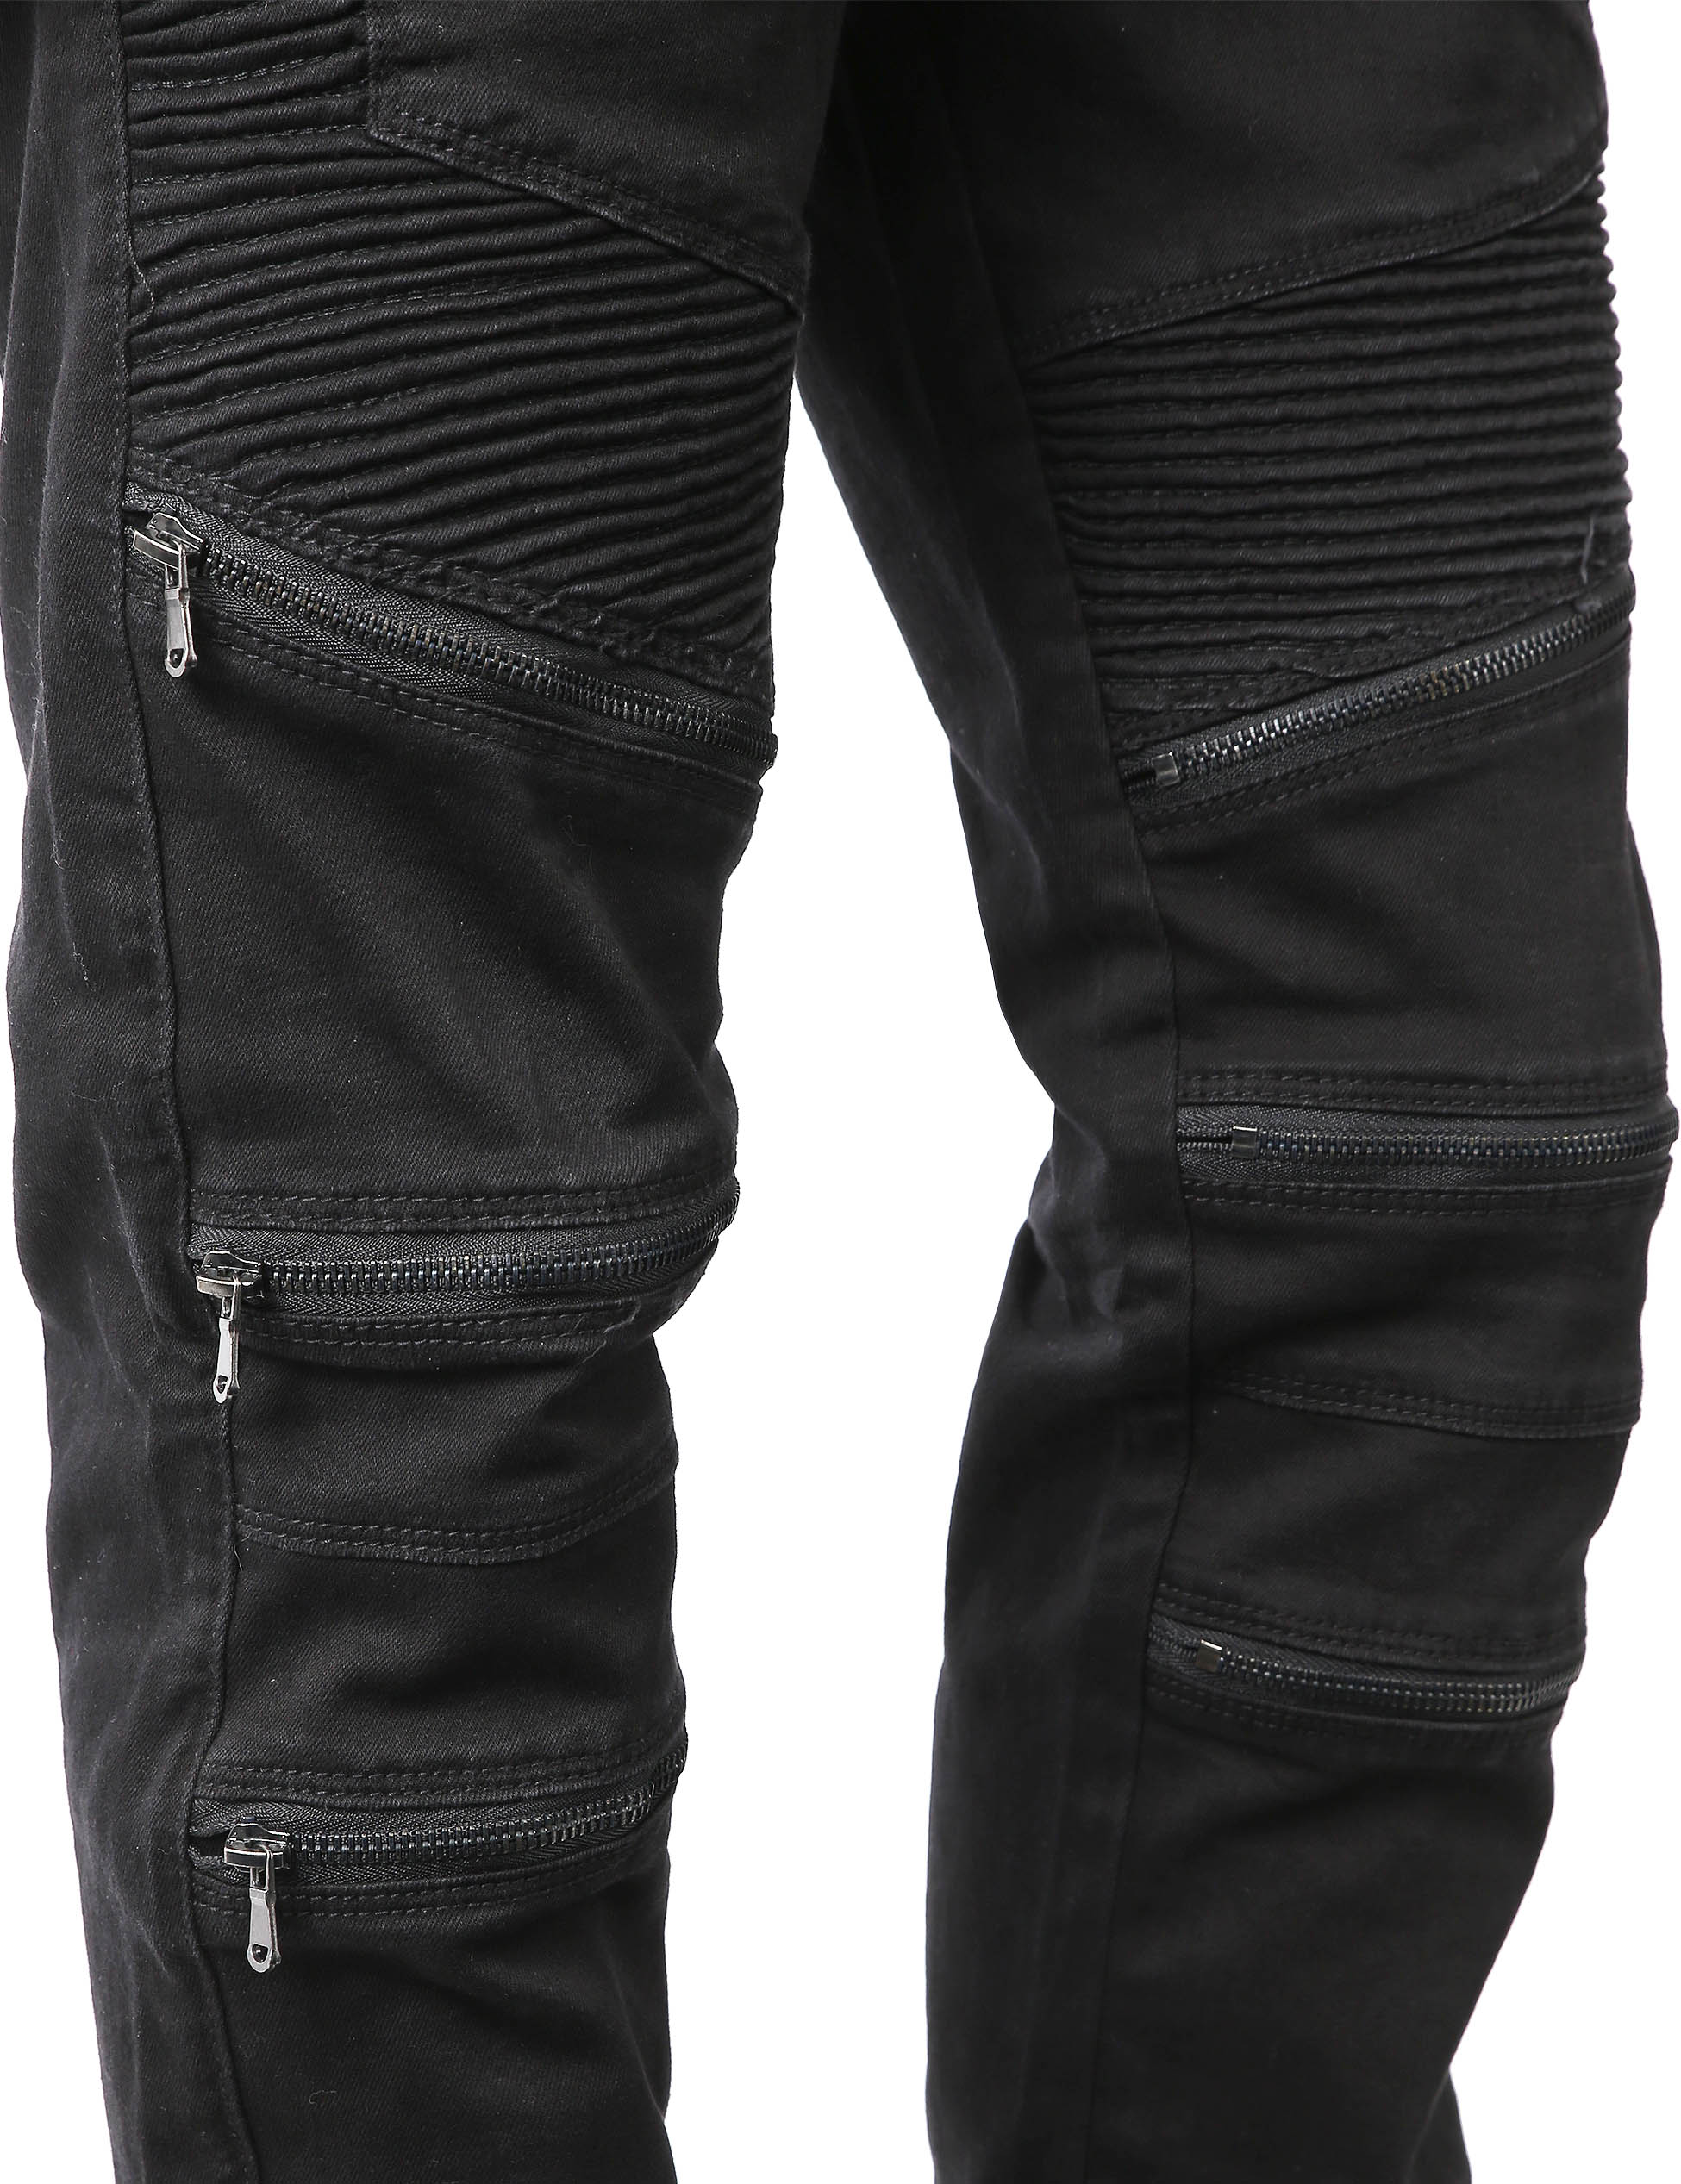 Ma Croix Mens Biker Jeans Slim Fit Distressed Ripped Zipper Stretch Denim Pants - image 5 of 6